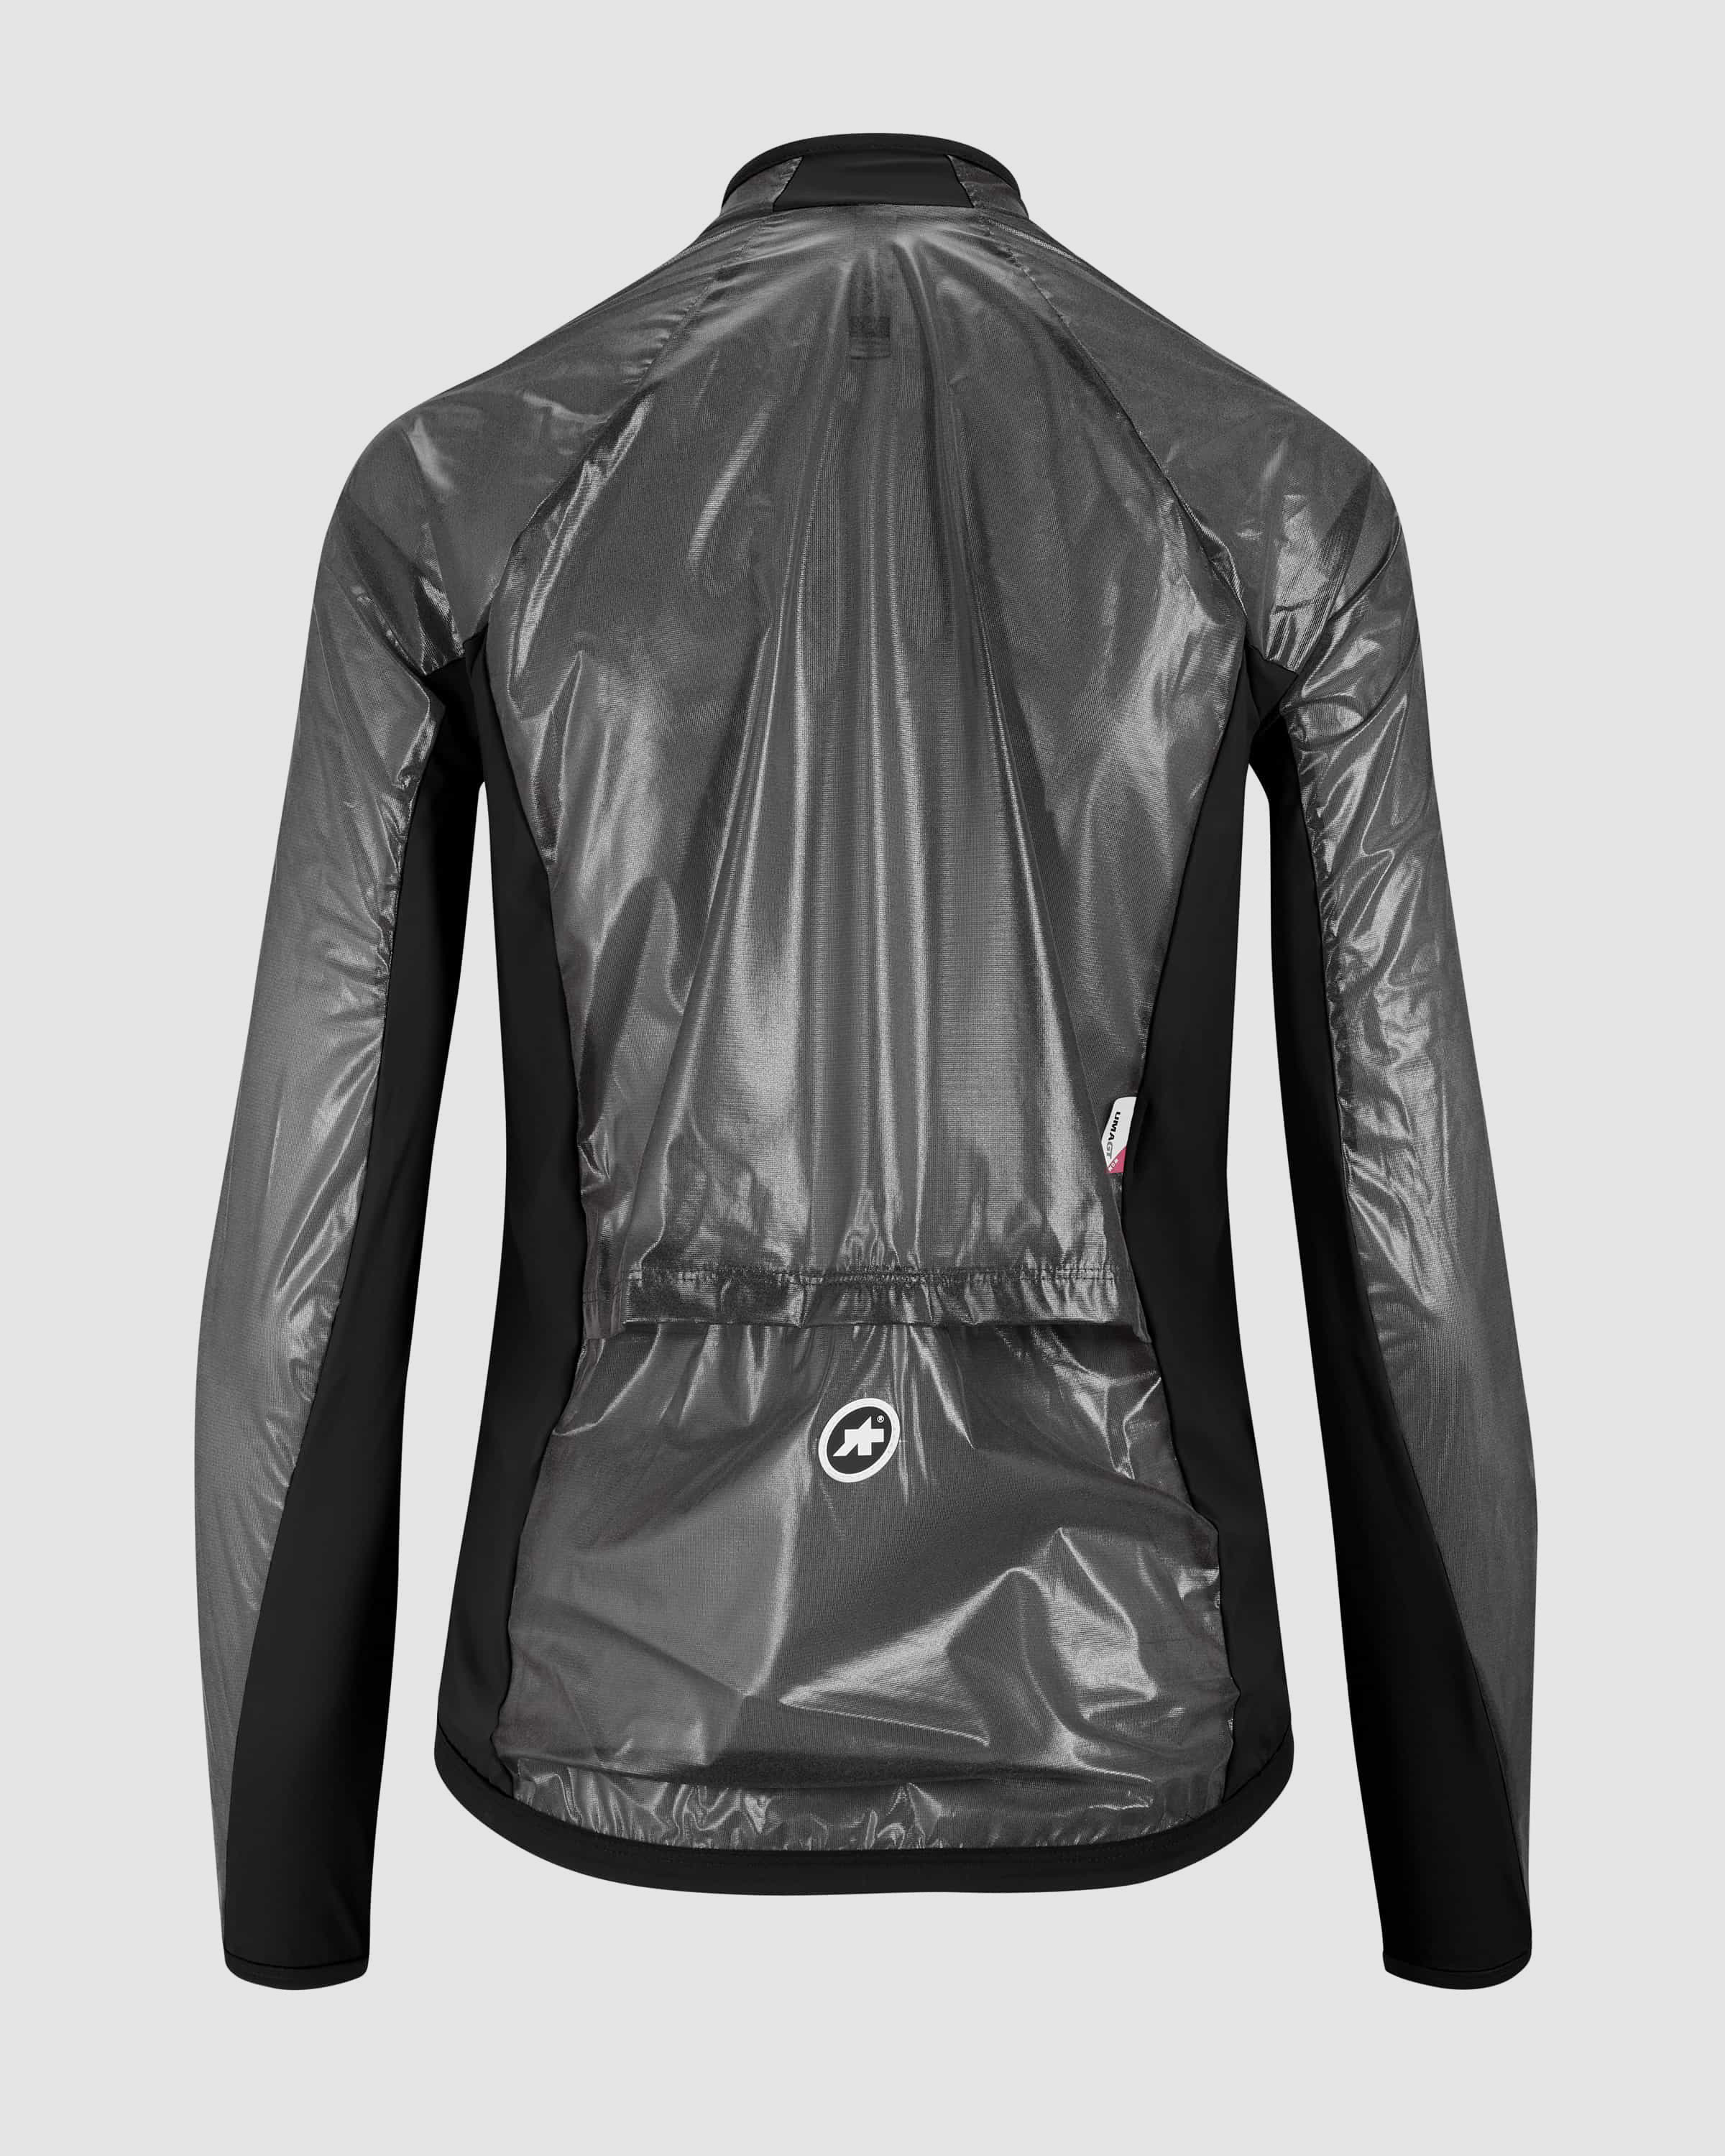 UMA GT Clima Jacket EVO - ASSOS Of Switzerland - Official Outlet